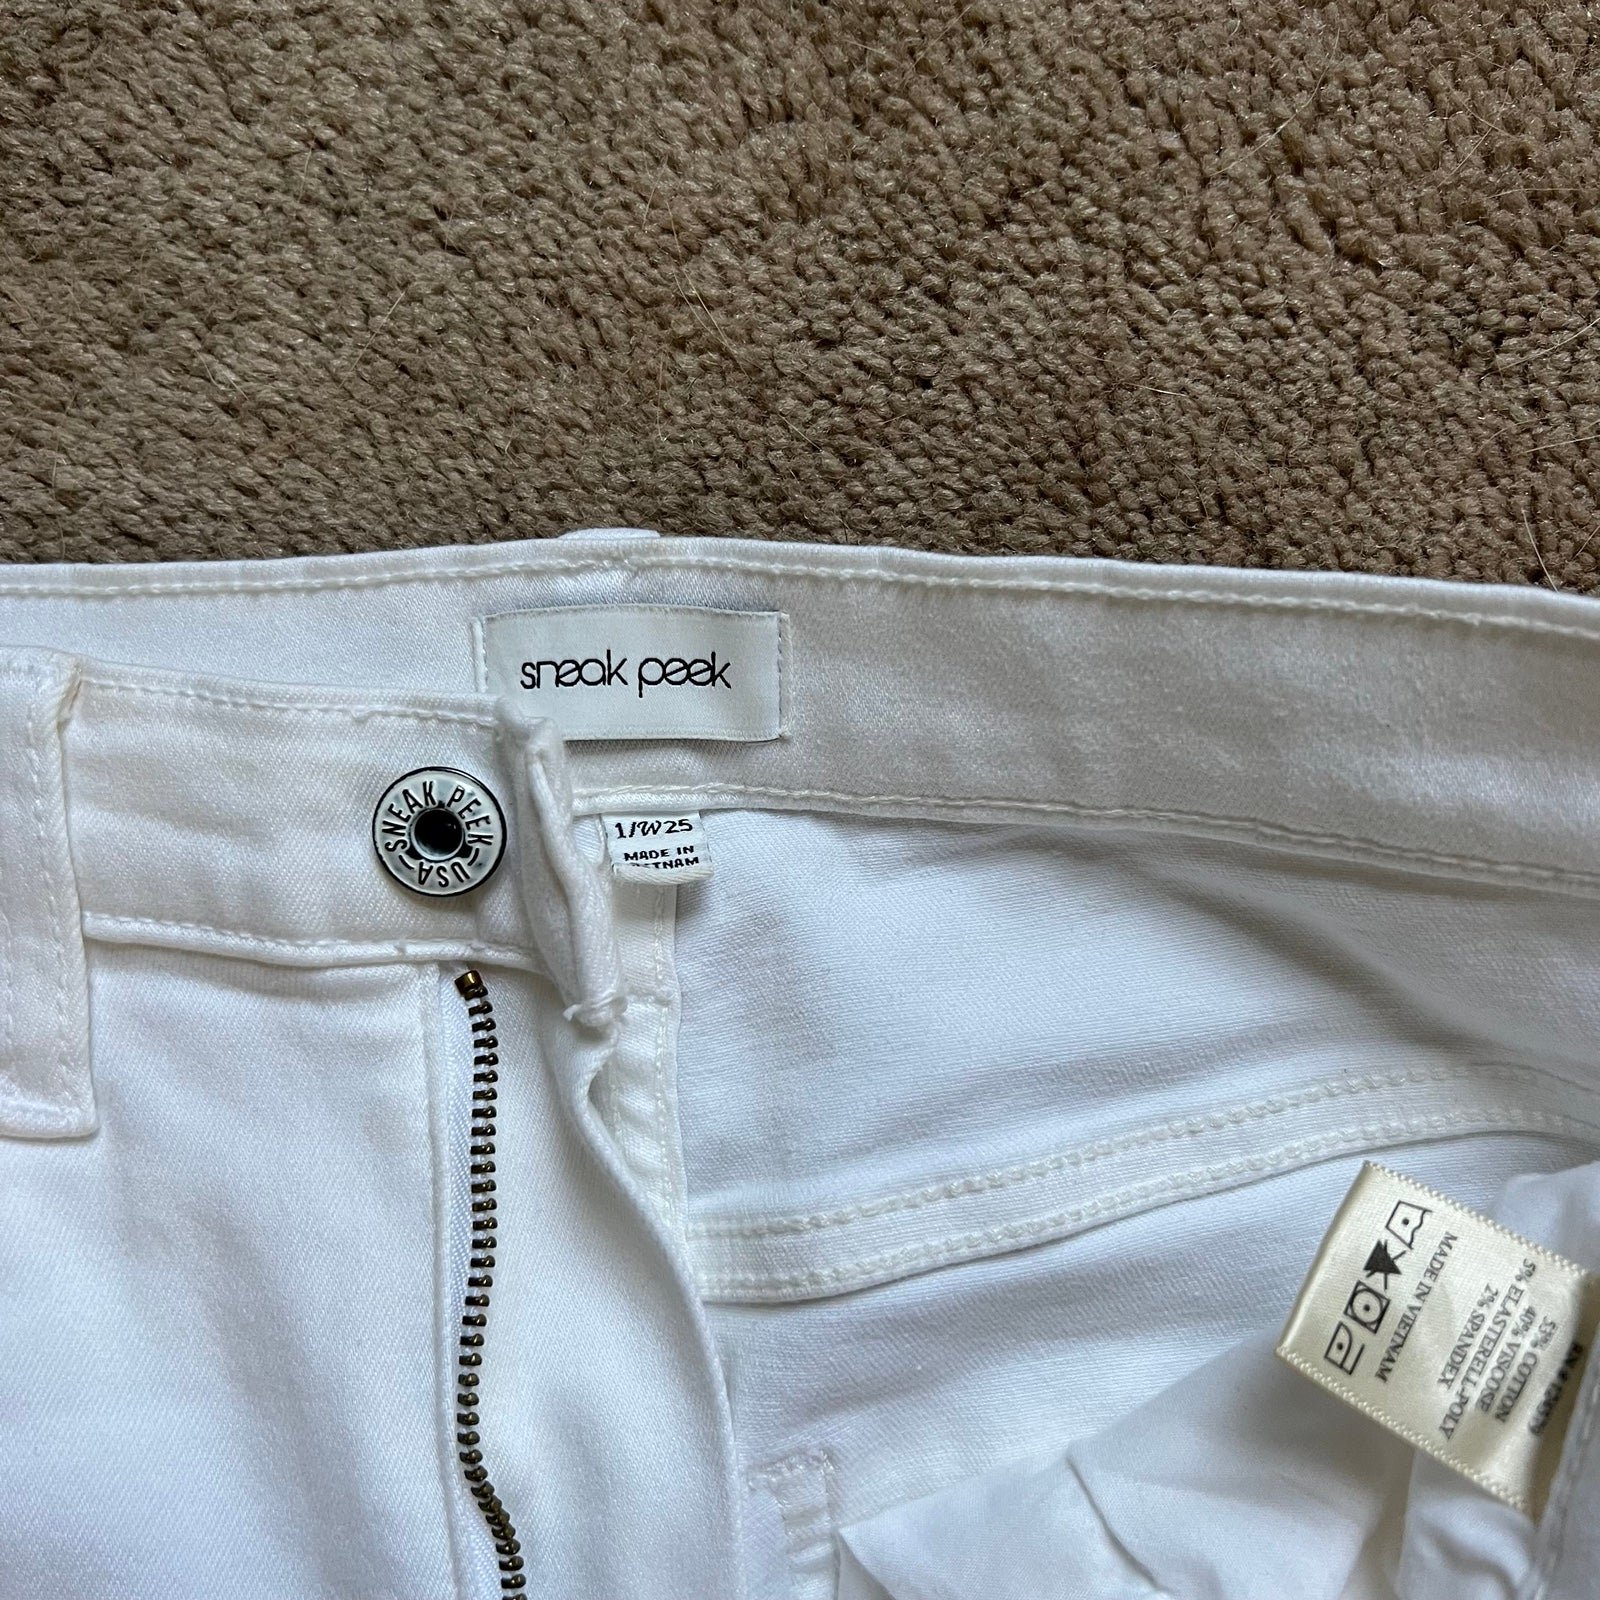 Discounted White Mid Rise Flare Jeans IukpVFQcu High Quaity